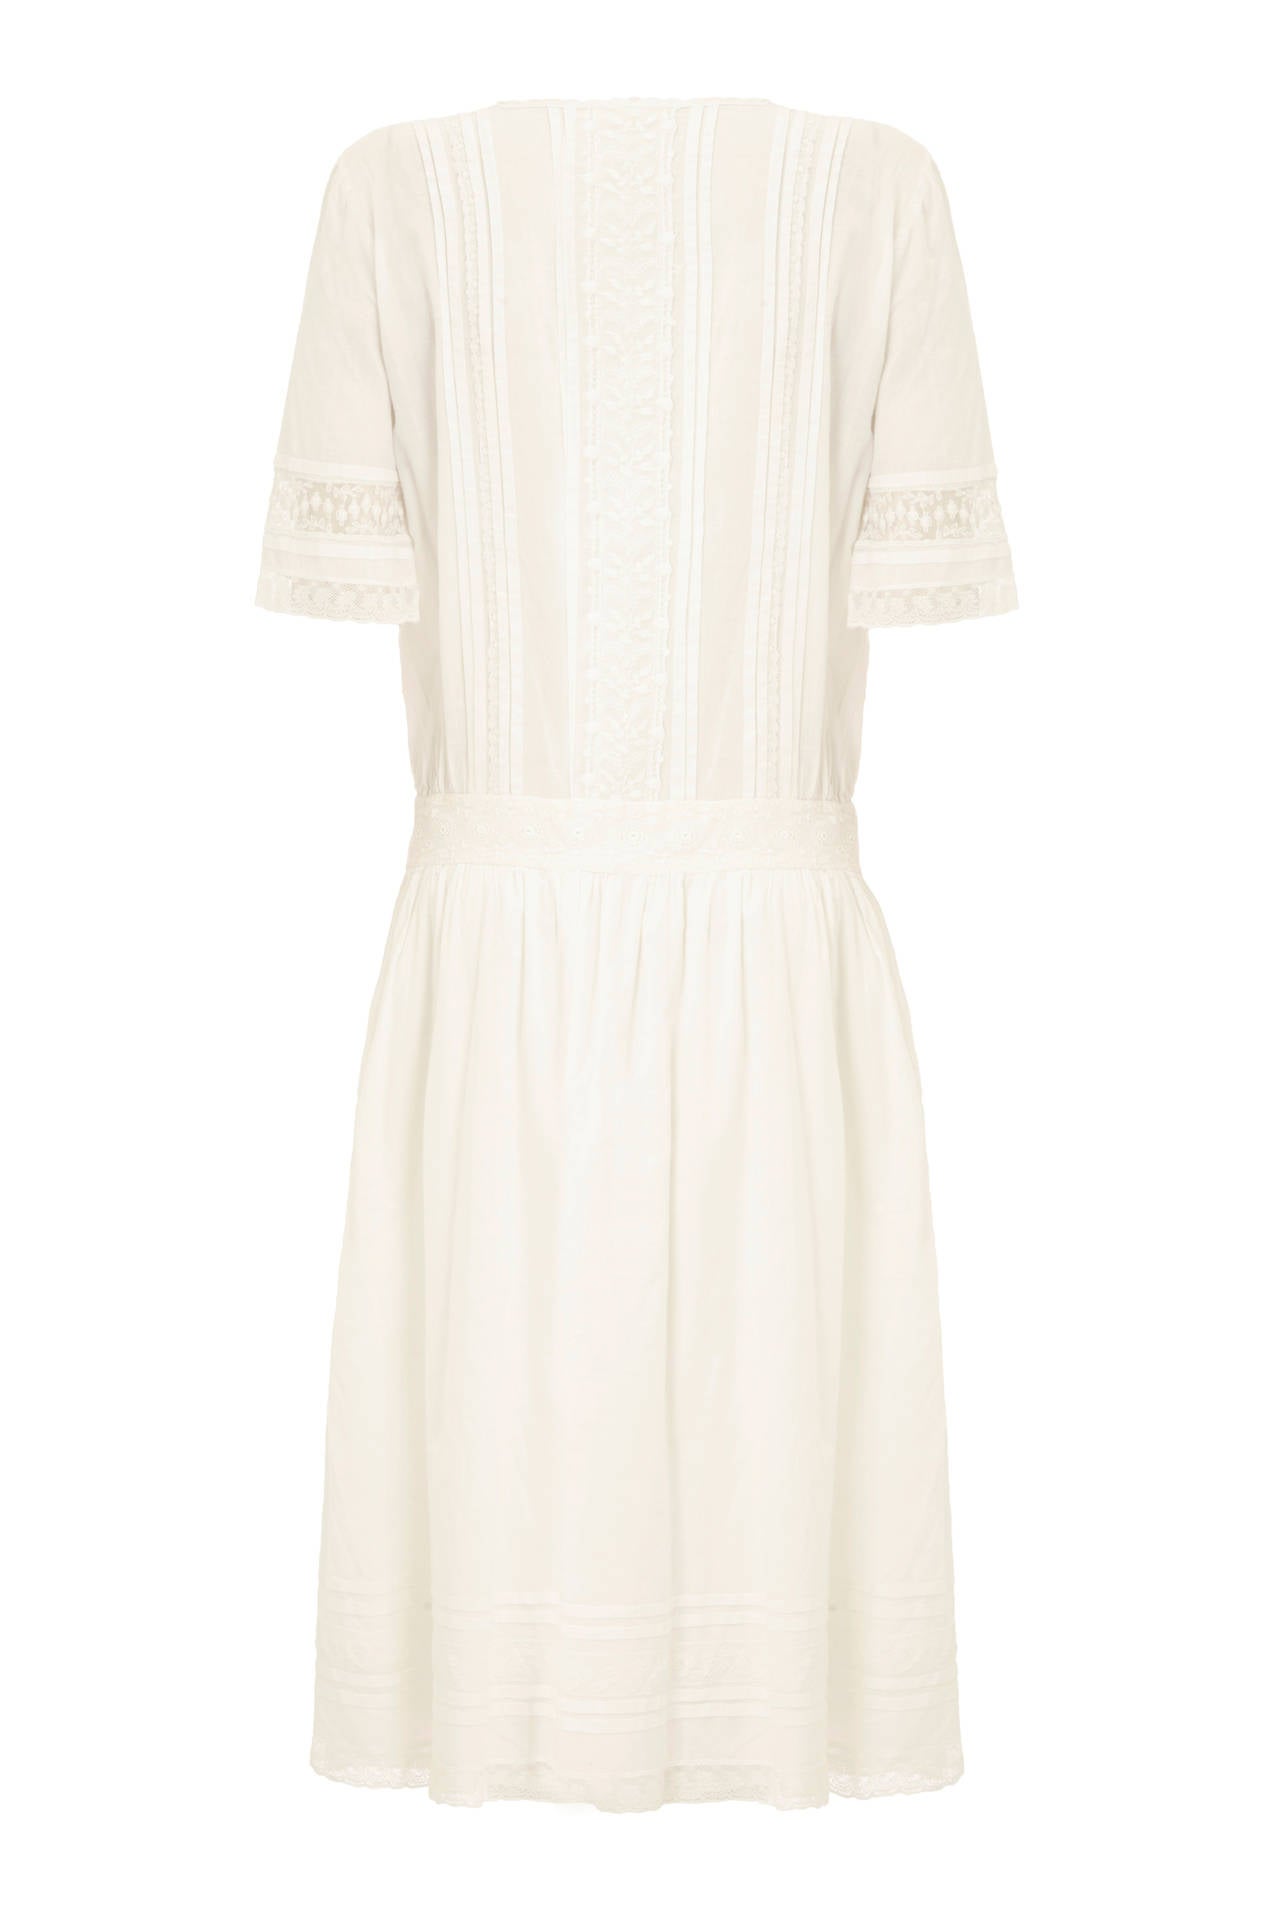 1920s White Cotton Dress at 1stdibs